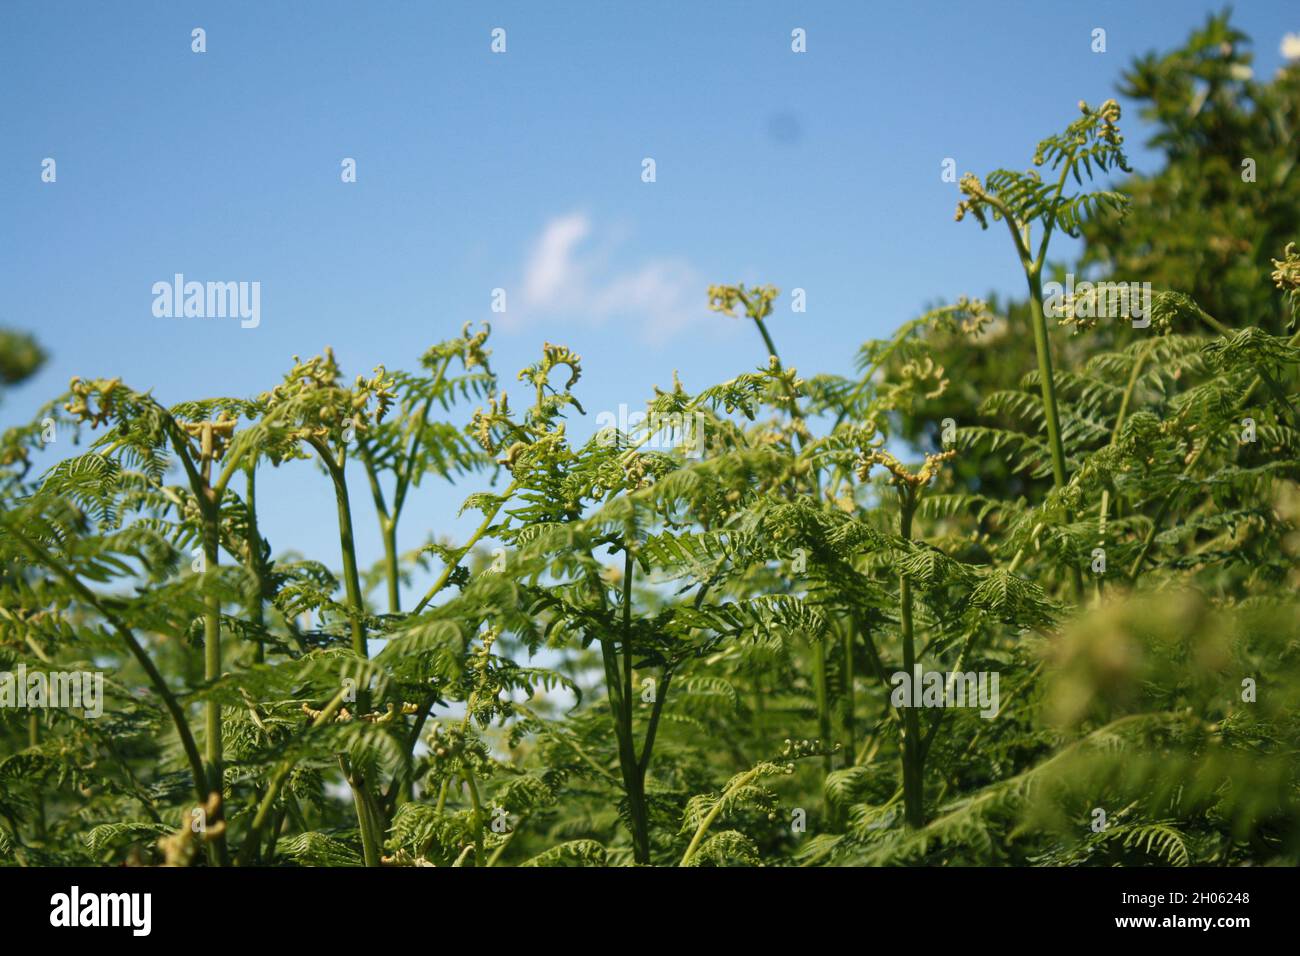 Foliage close up with blue sky. Stock Photo